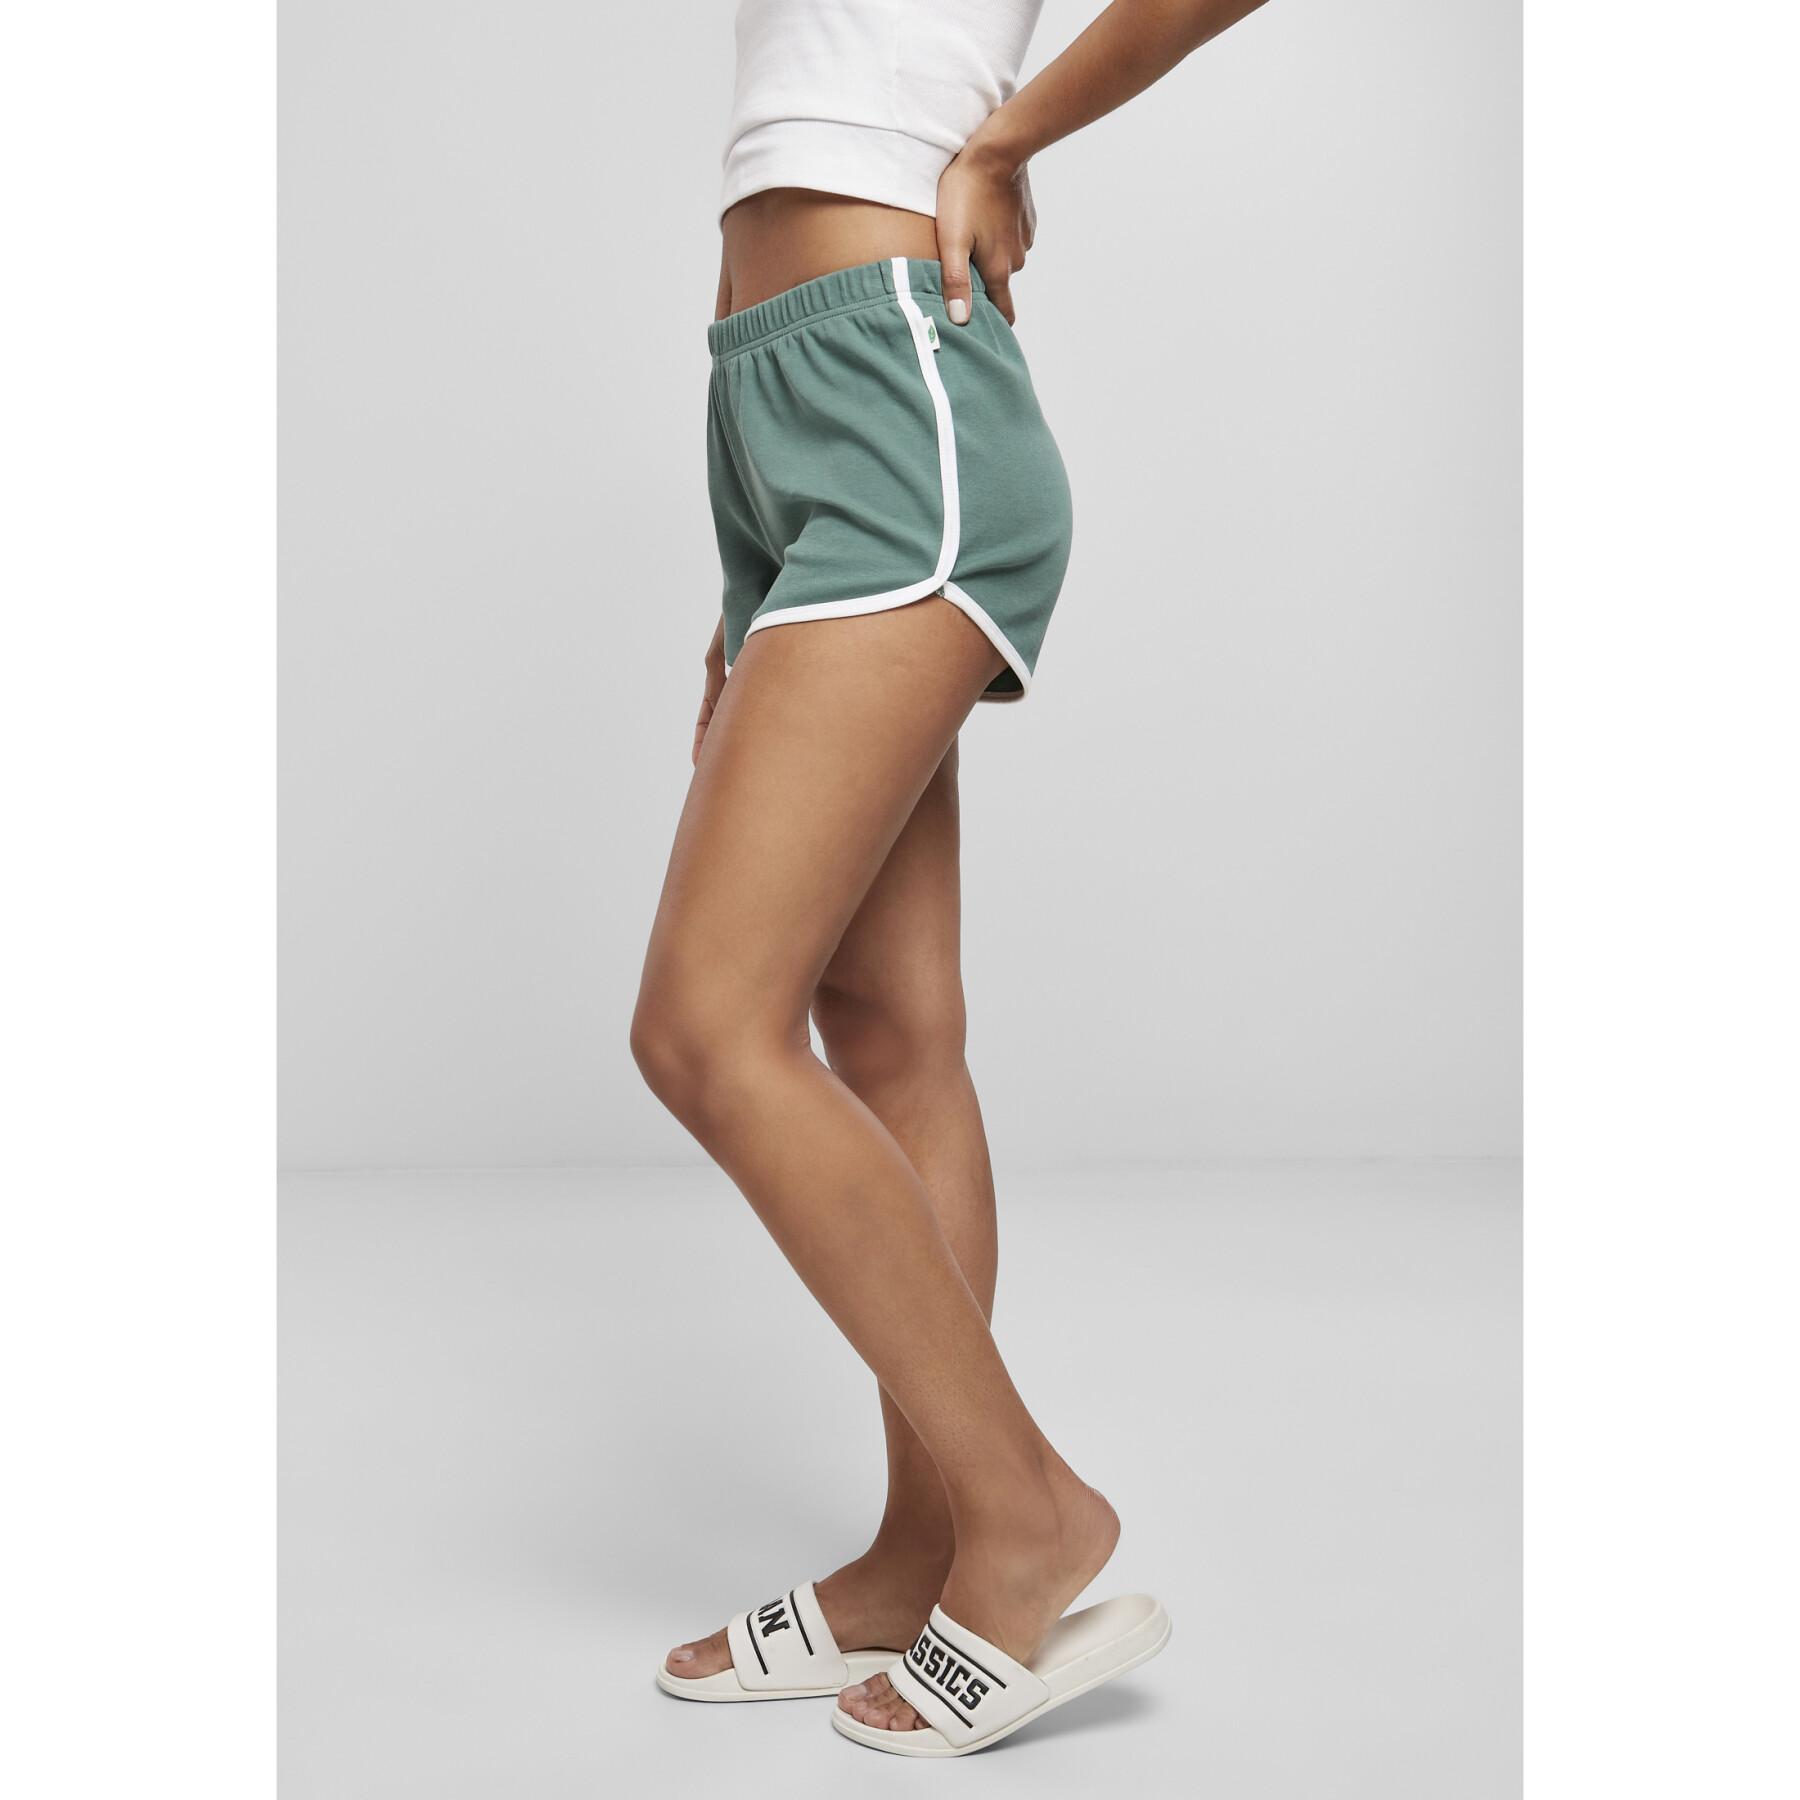 Women's shorts Urban Classics organic interlock retro hotpants (large sizes)